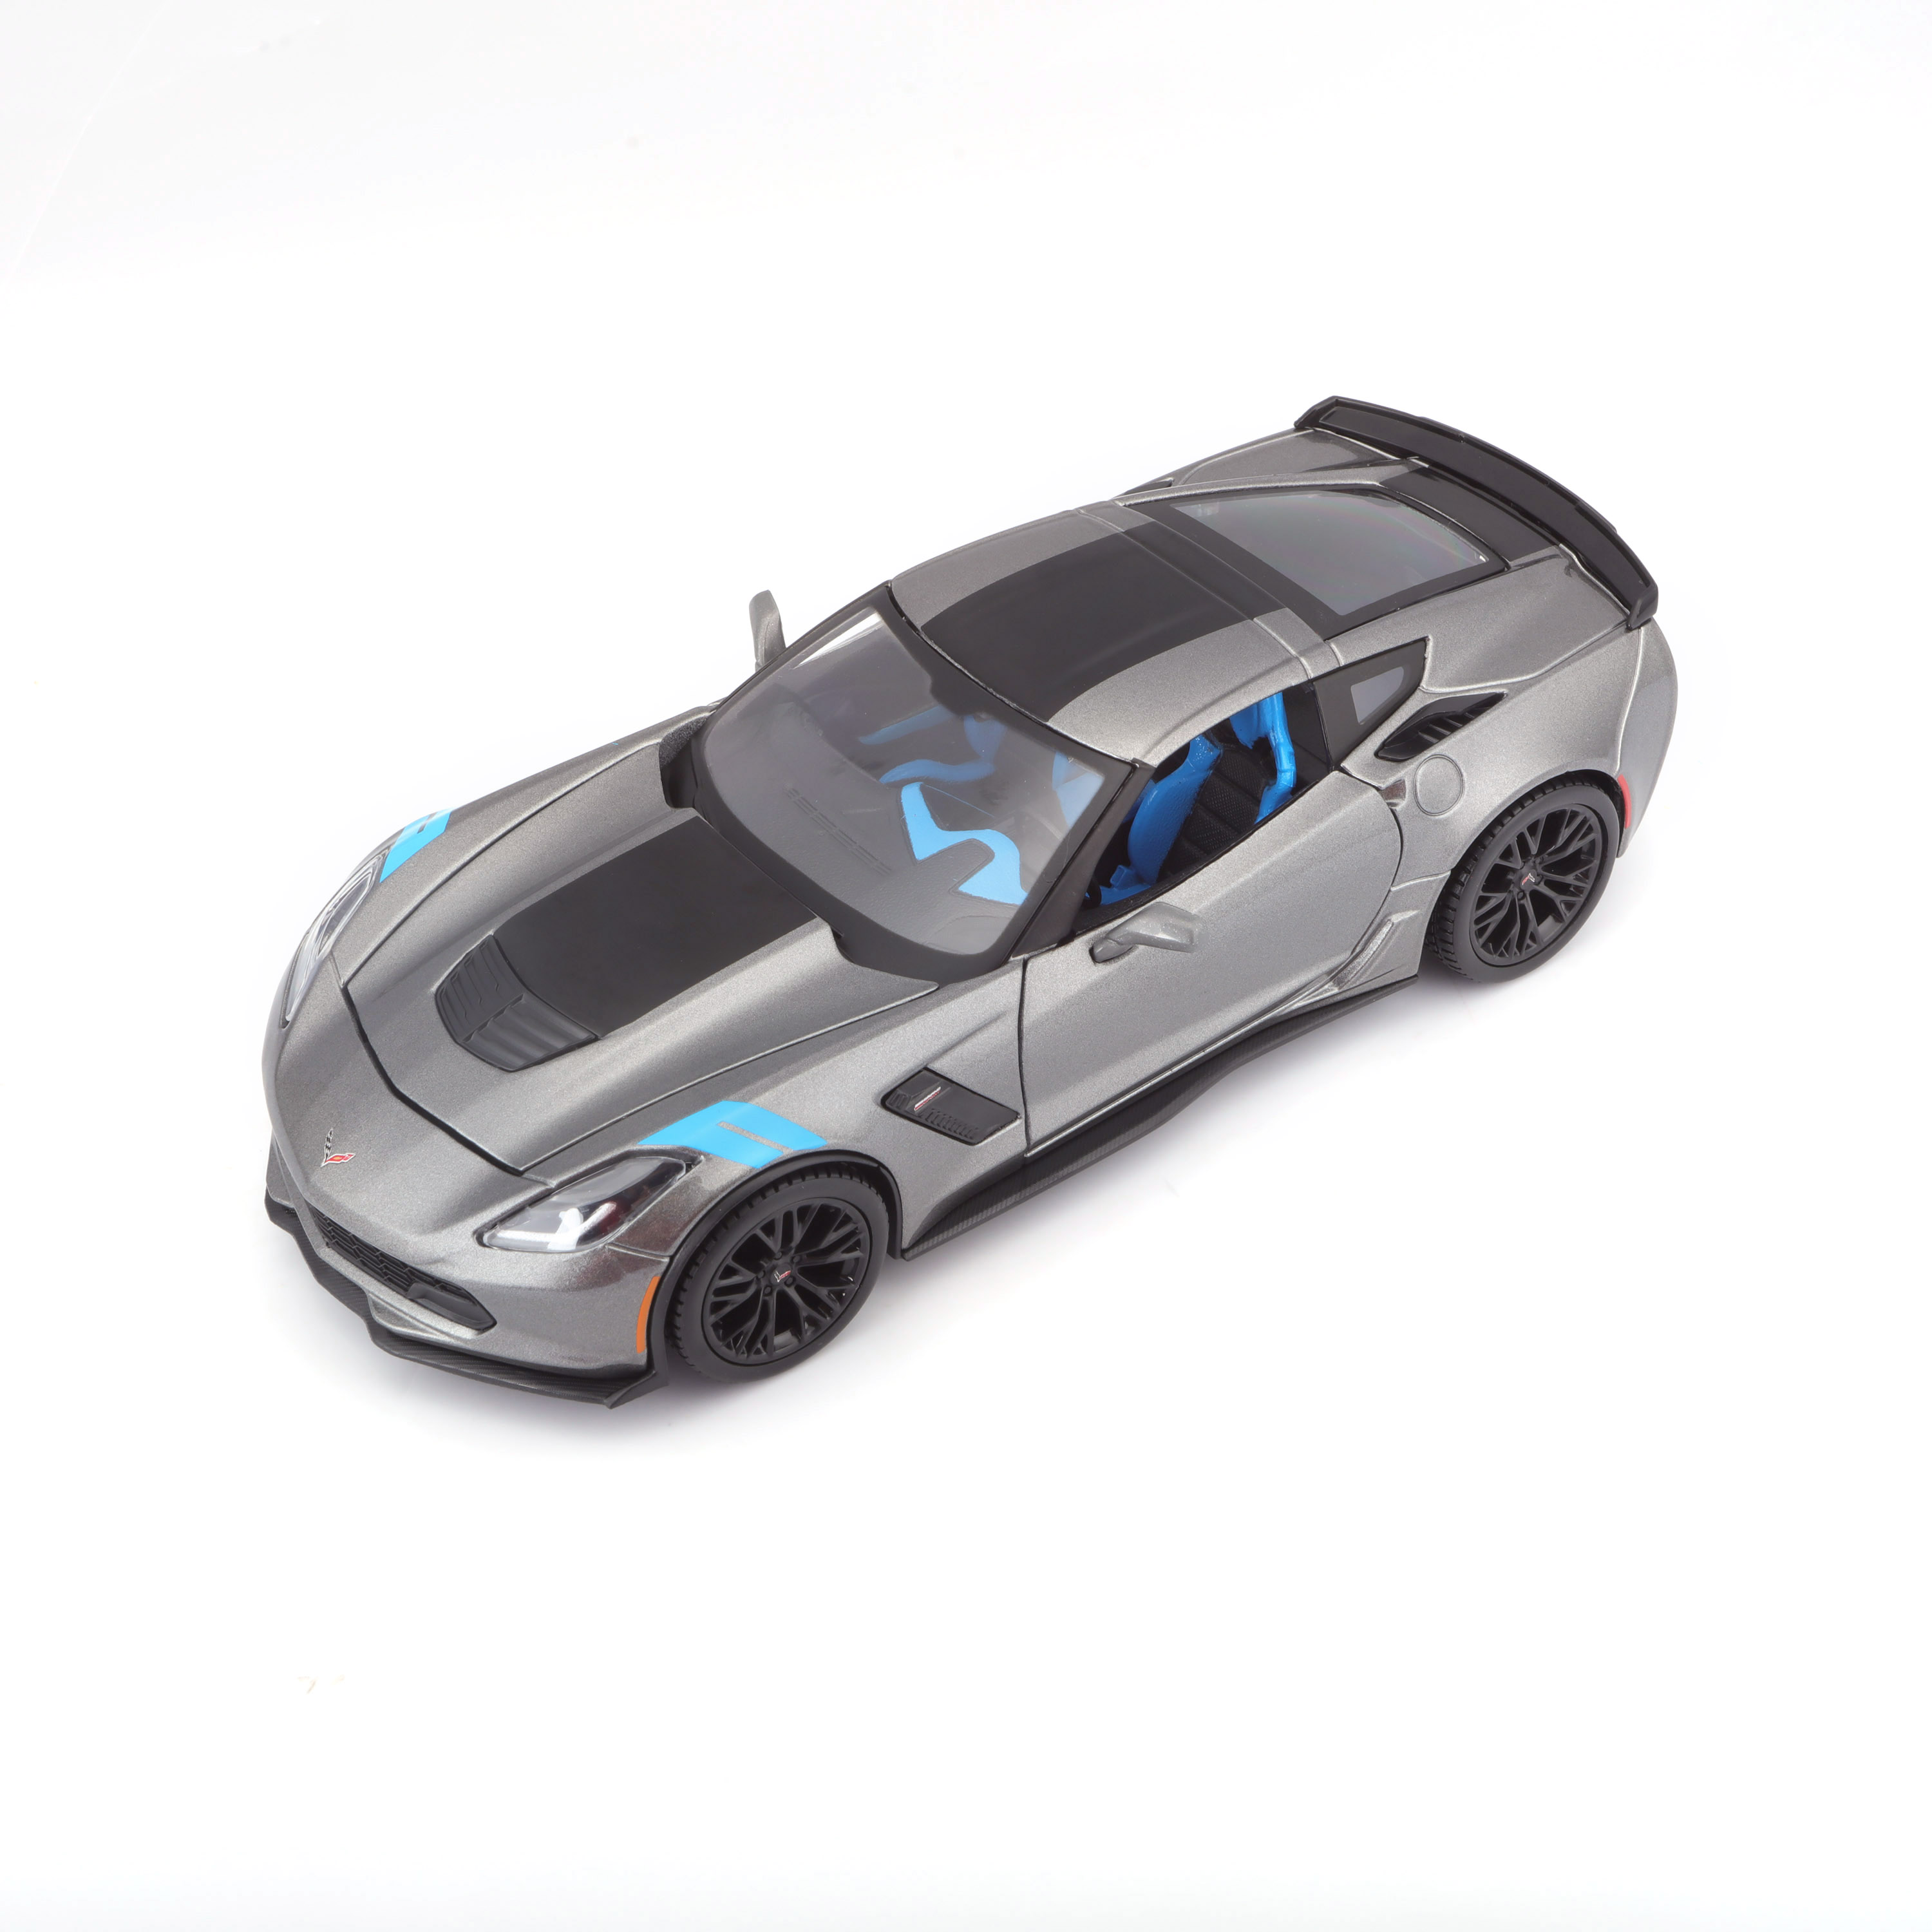 Ігрова автомодель Maisto Corvette Grand Sport 2017, сірий металік, 1:24 (31516 met. grey) - фото 3